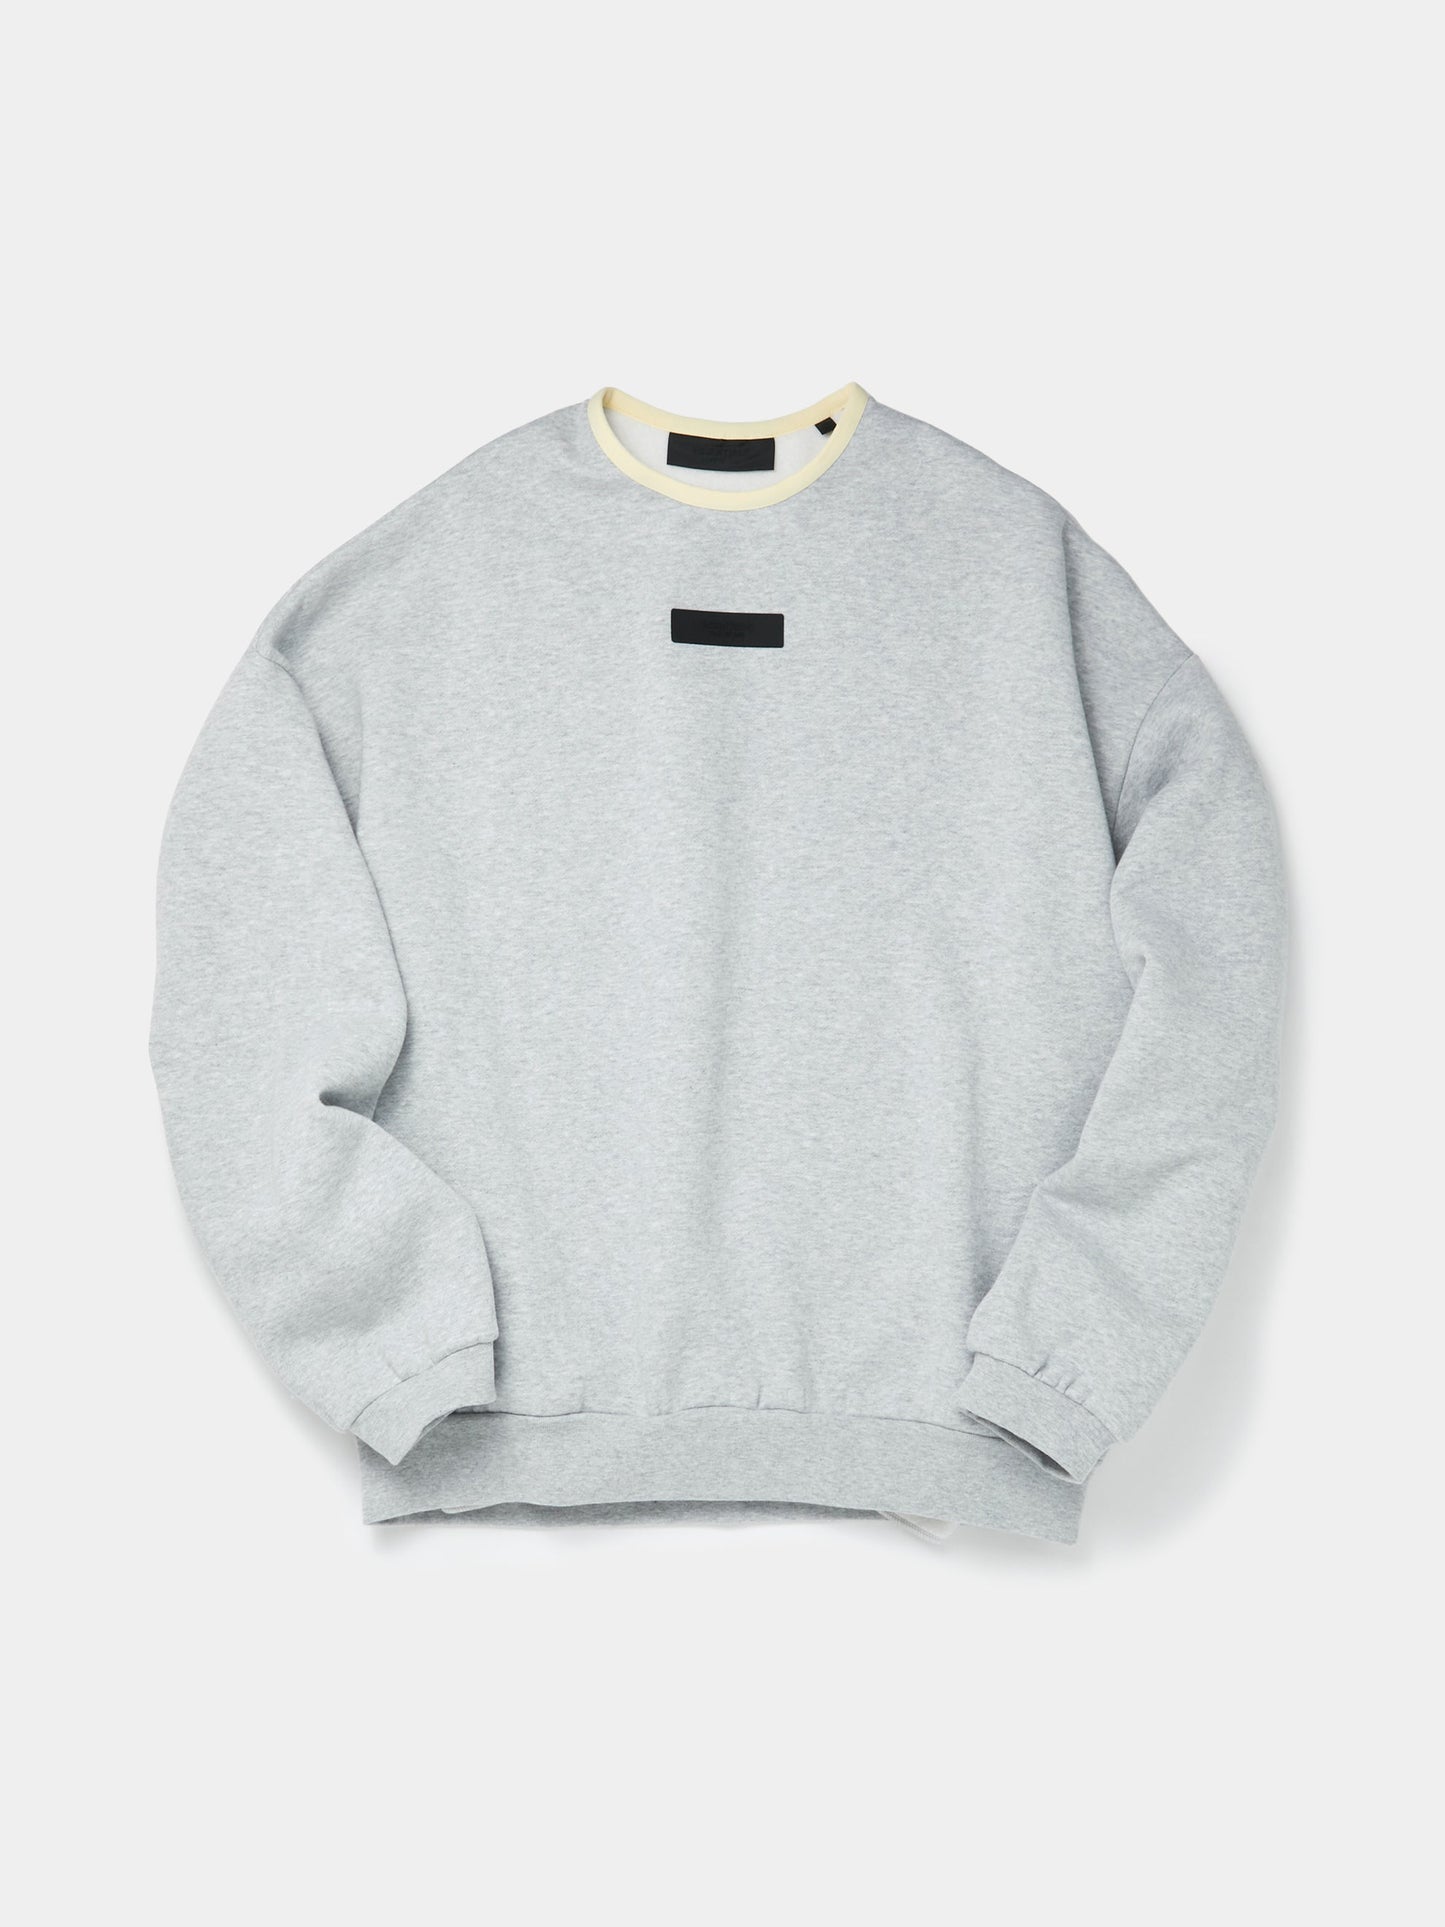 Crewneck Sweater S24 (Light Heather Grey)